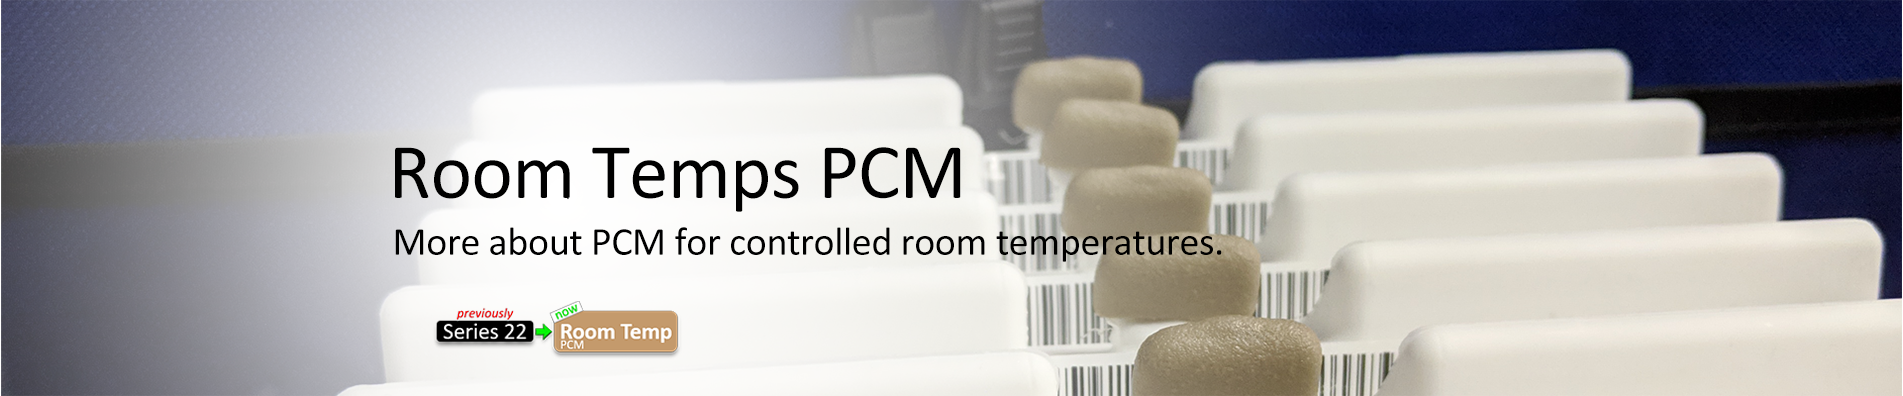 Room Temps PCM series 22 header